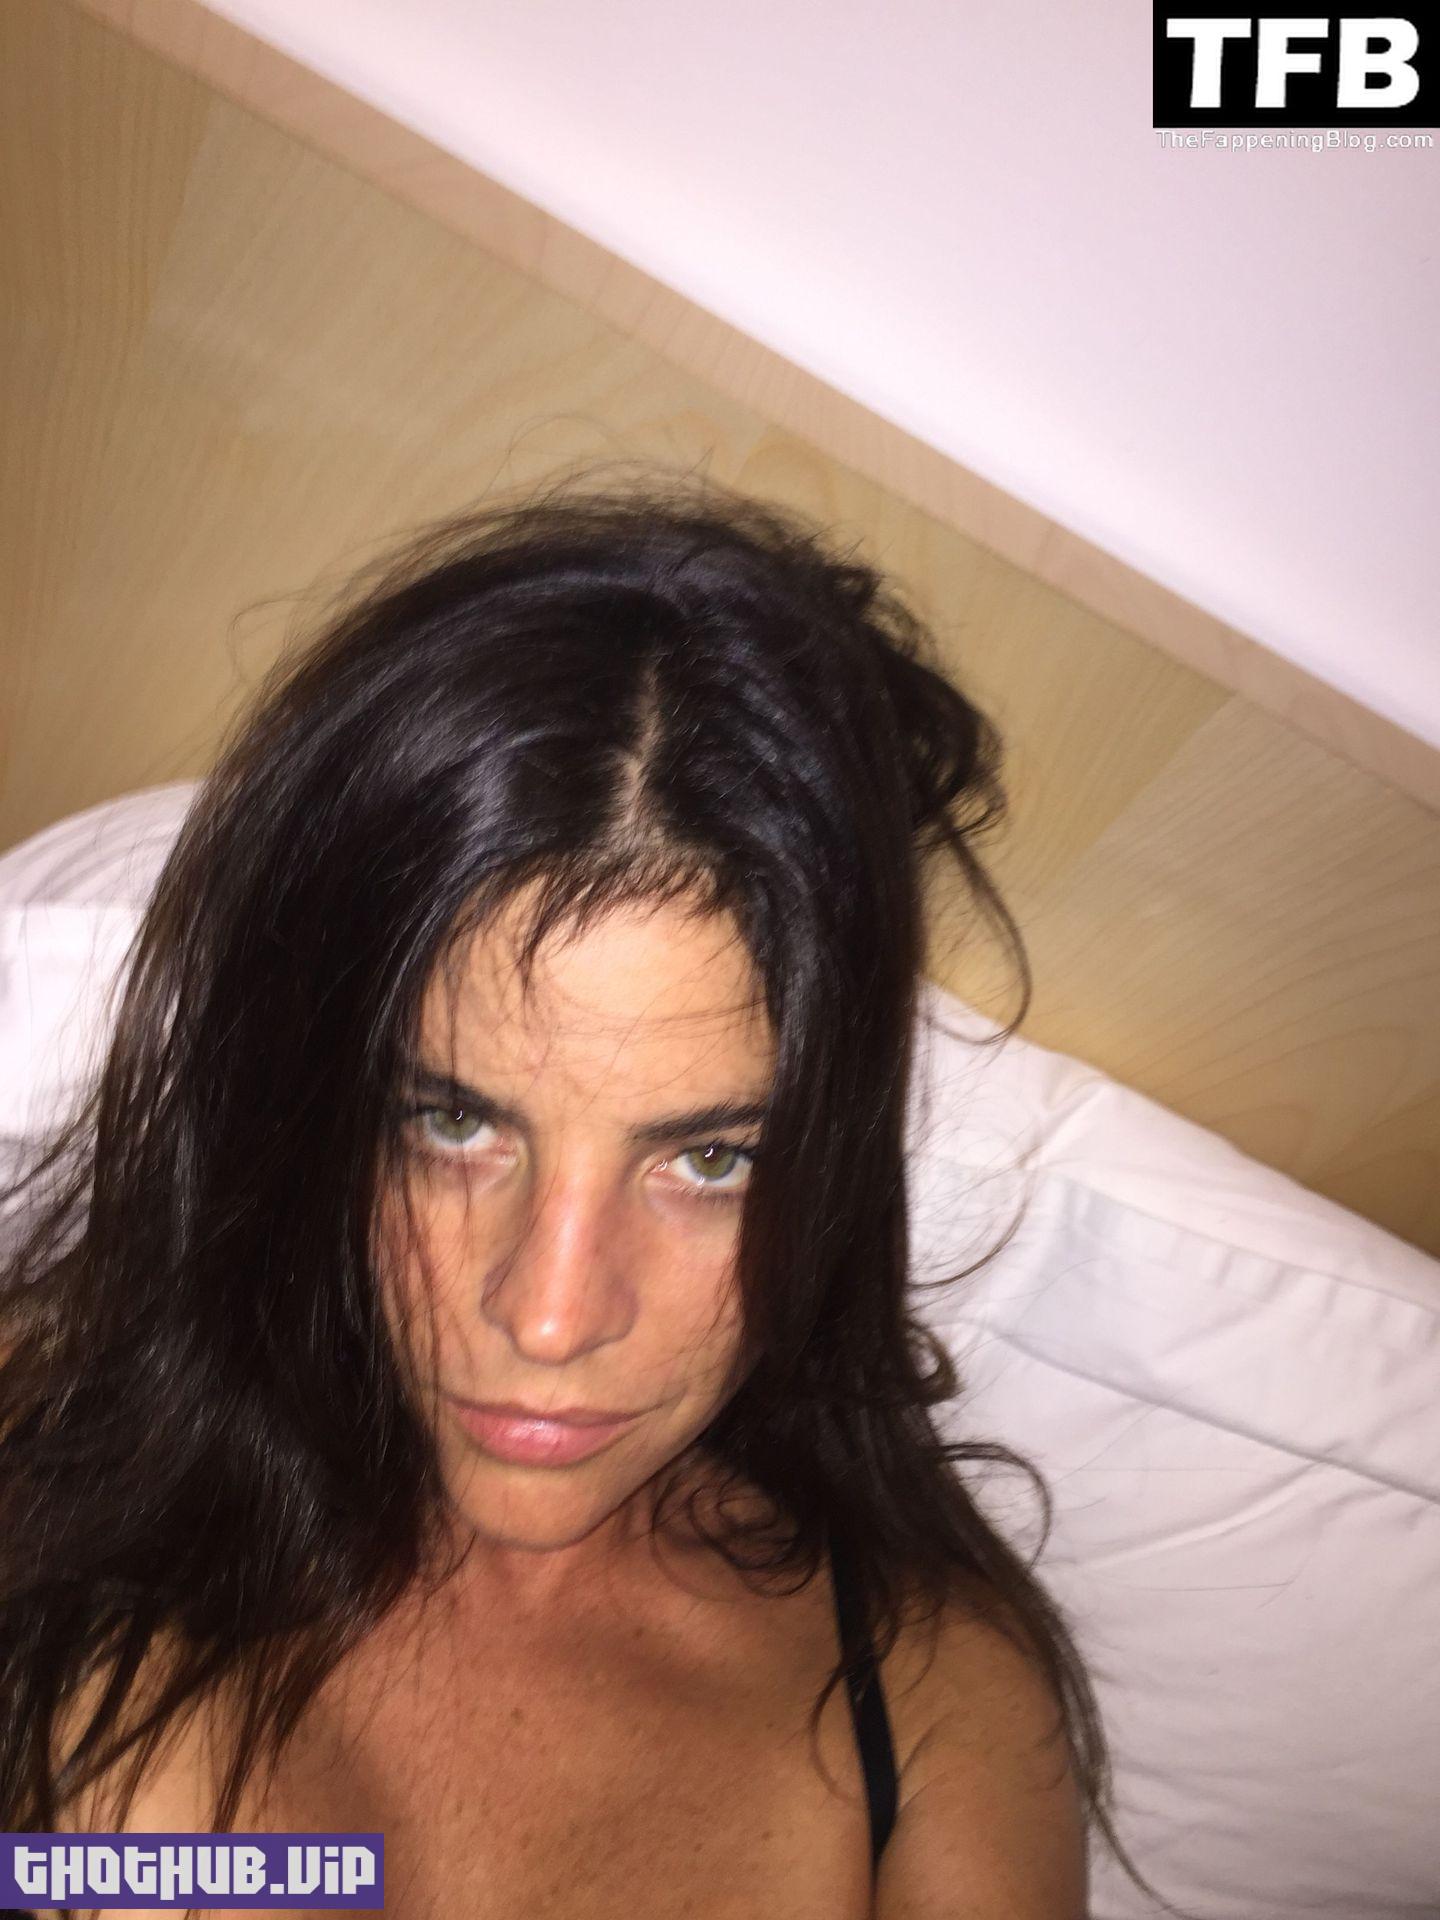 Morgana Balzarotti Nude Sexy Leaked The Fappening Blog 3 1